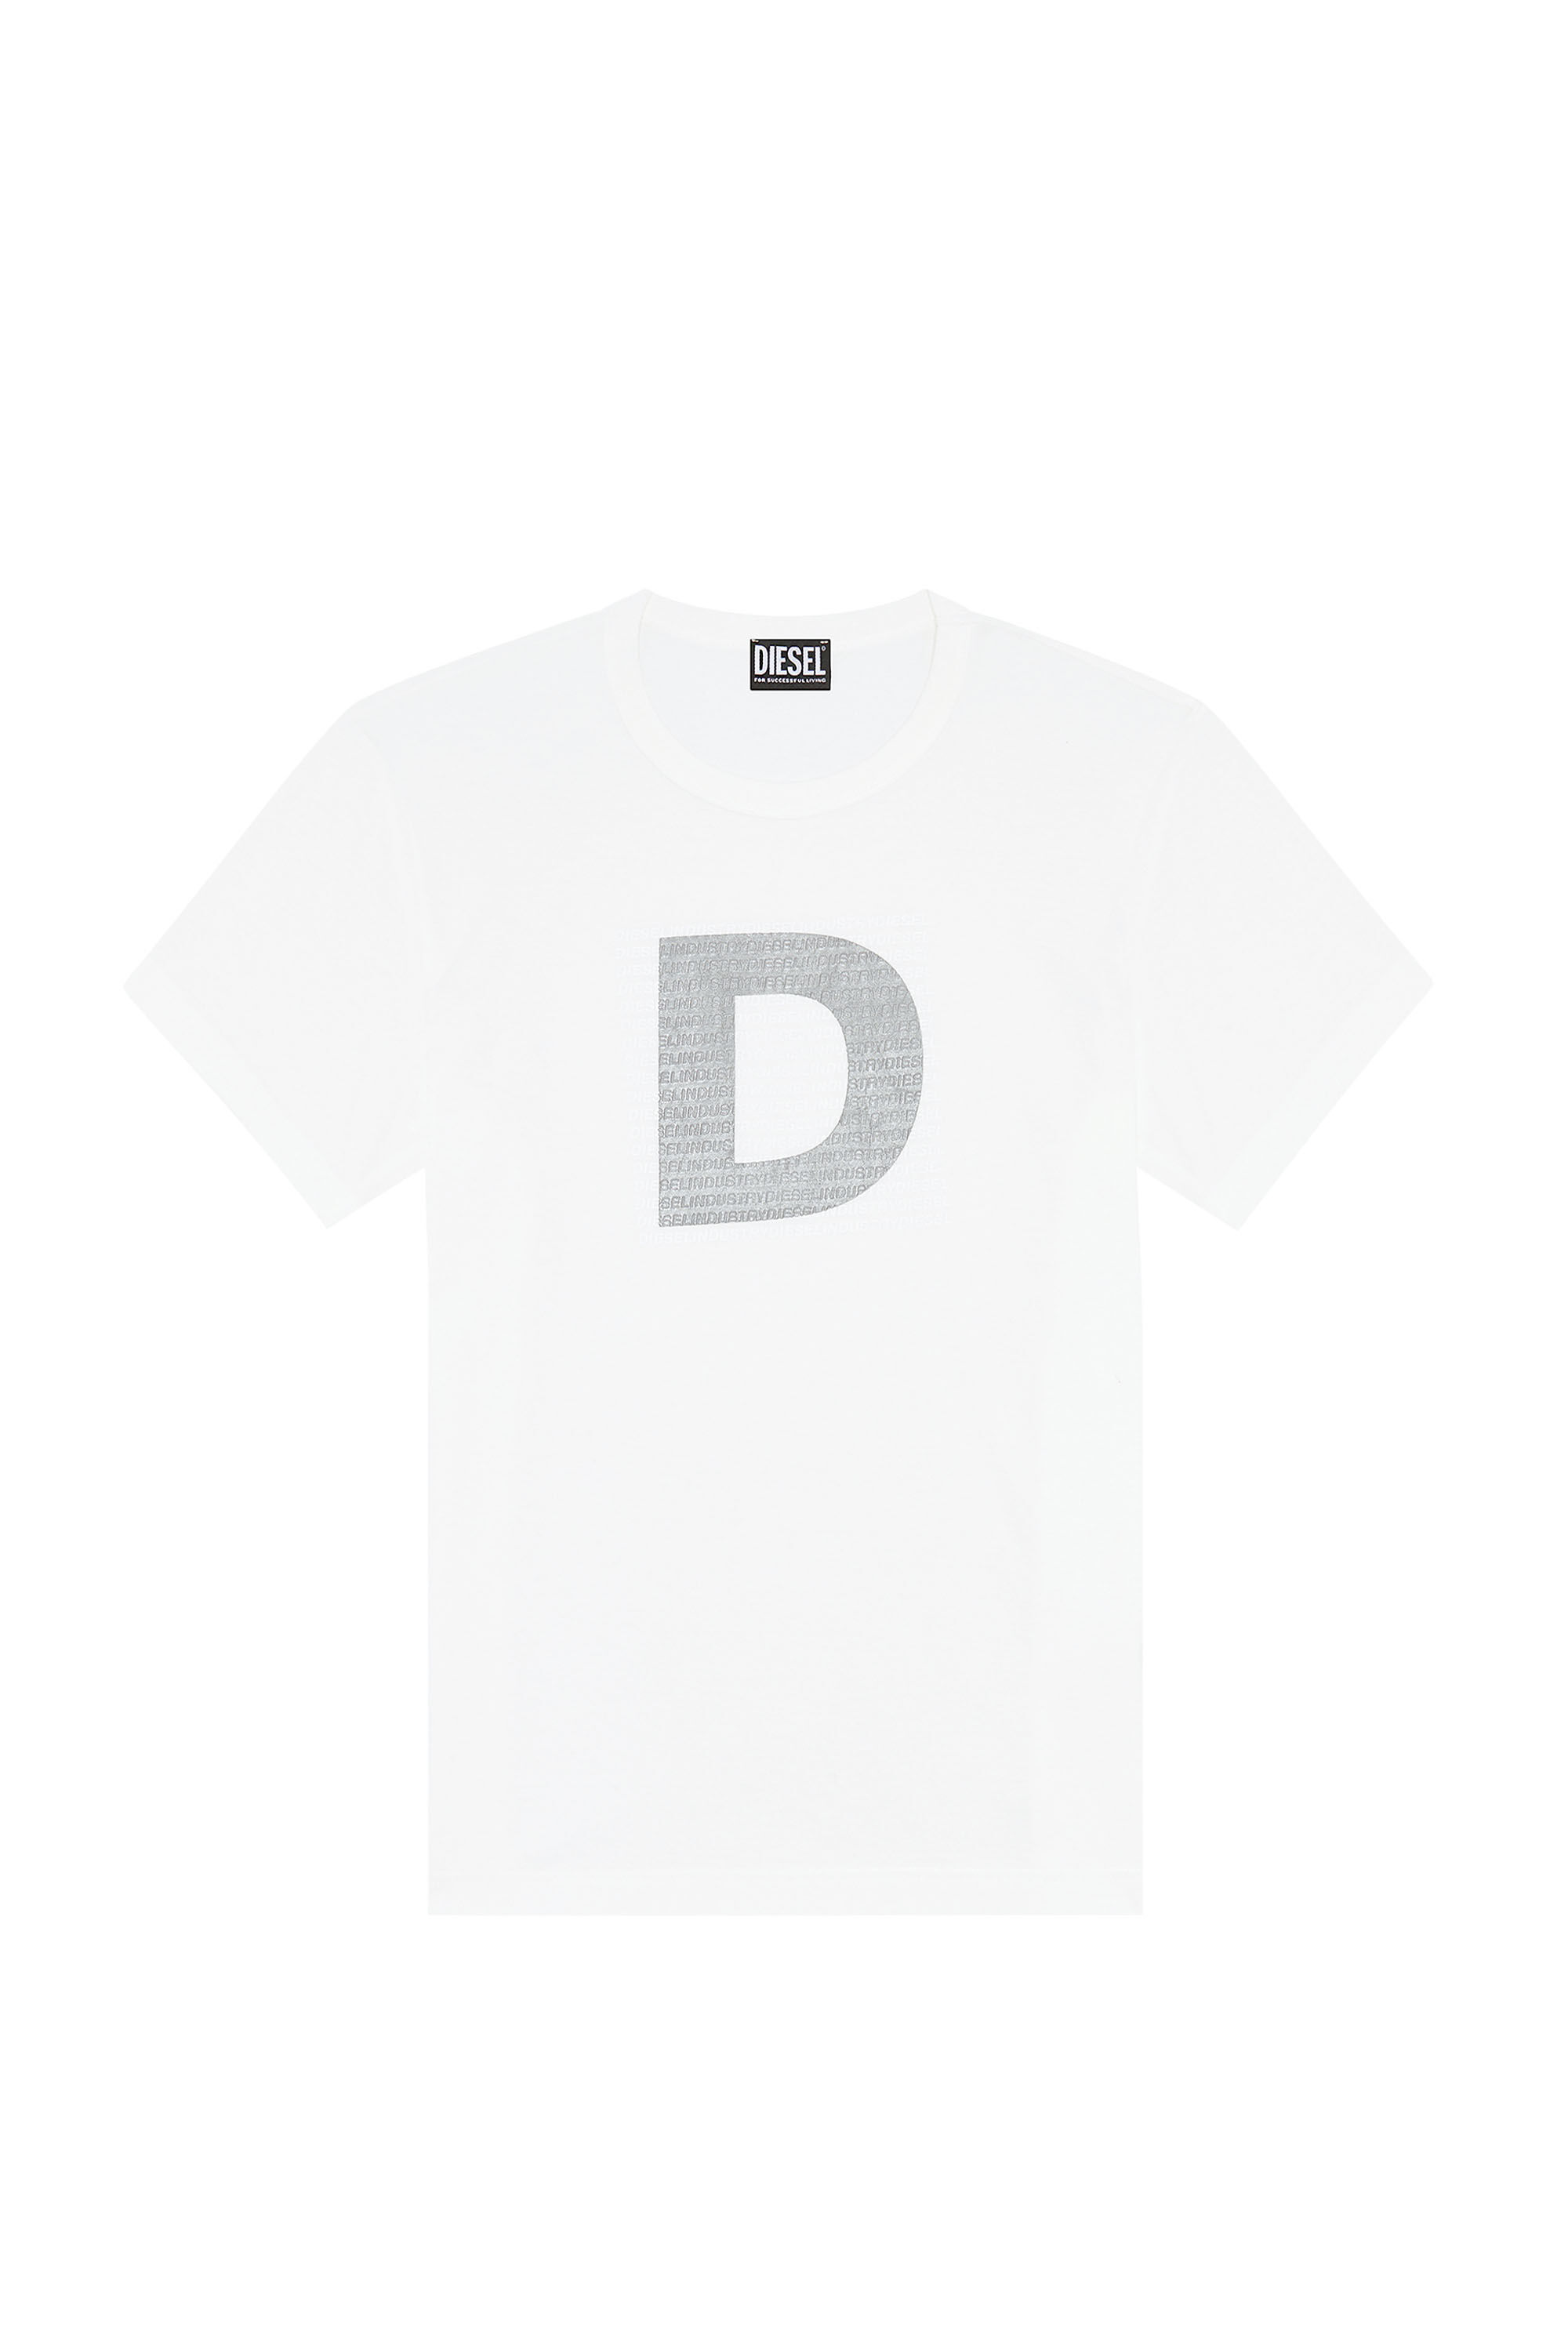 T-DIEGOR-COL Man: T-shirt with silver D logo print | Diesel